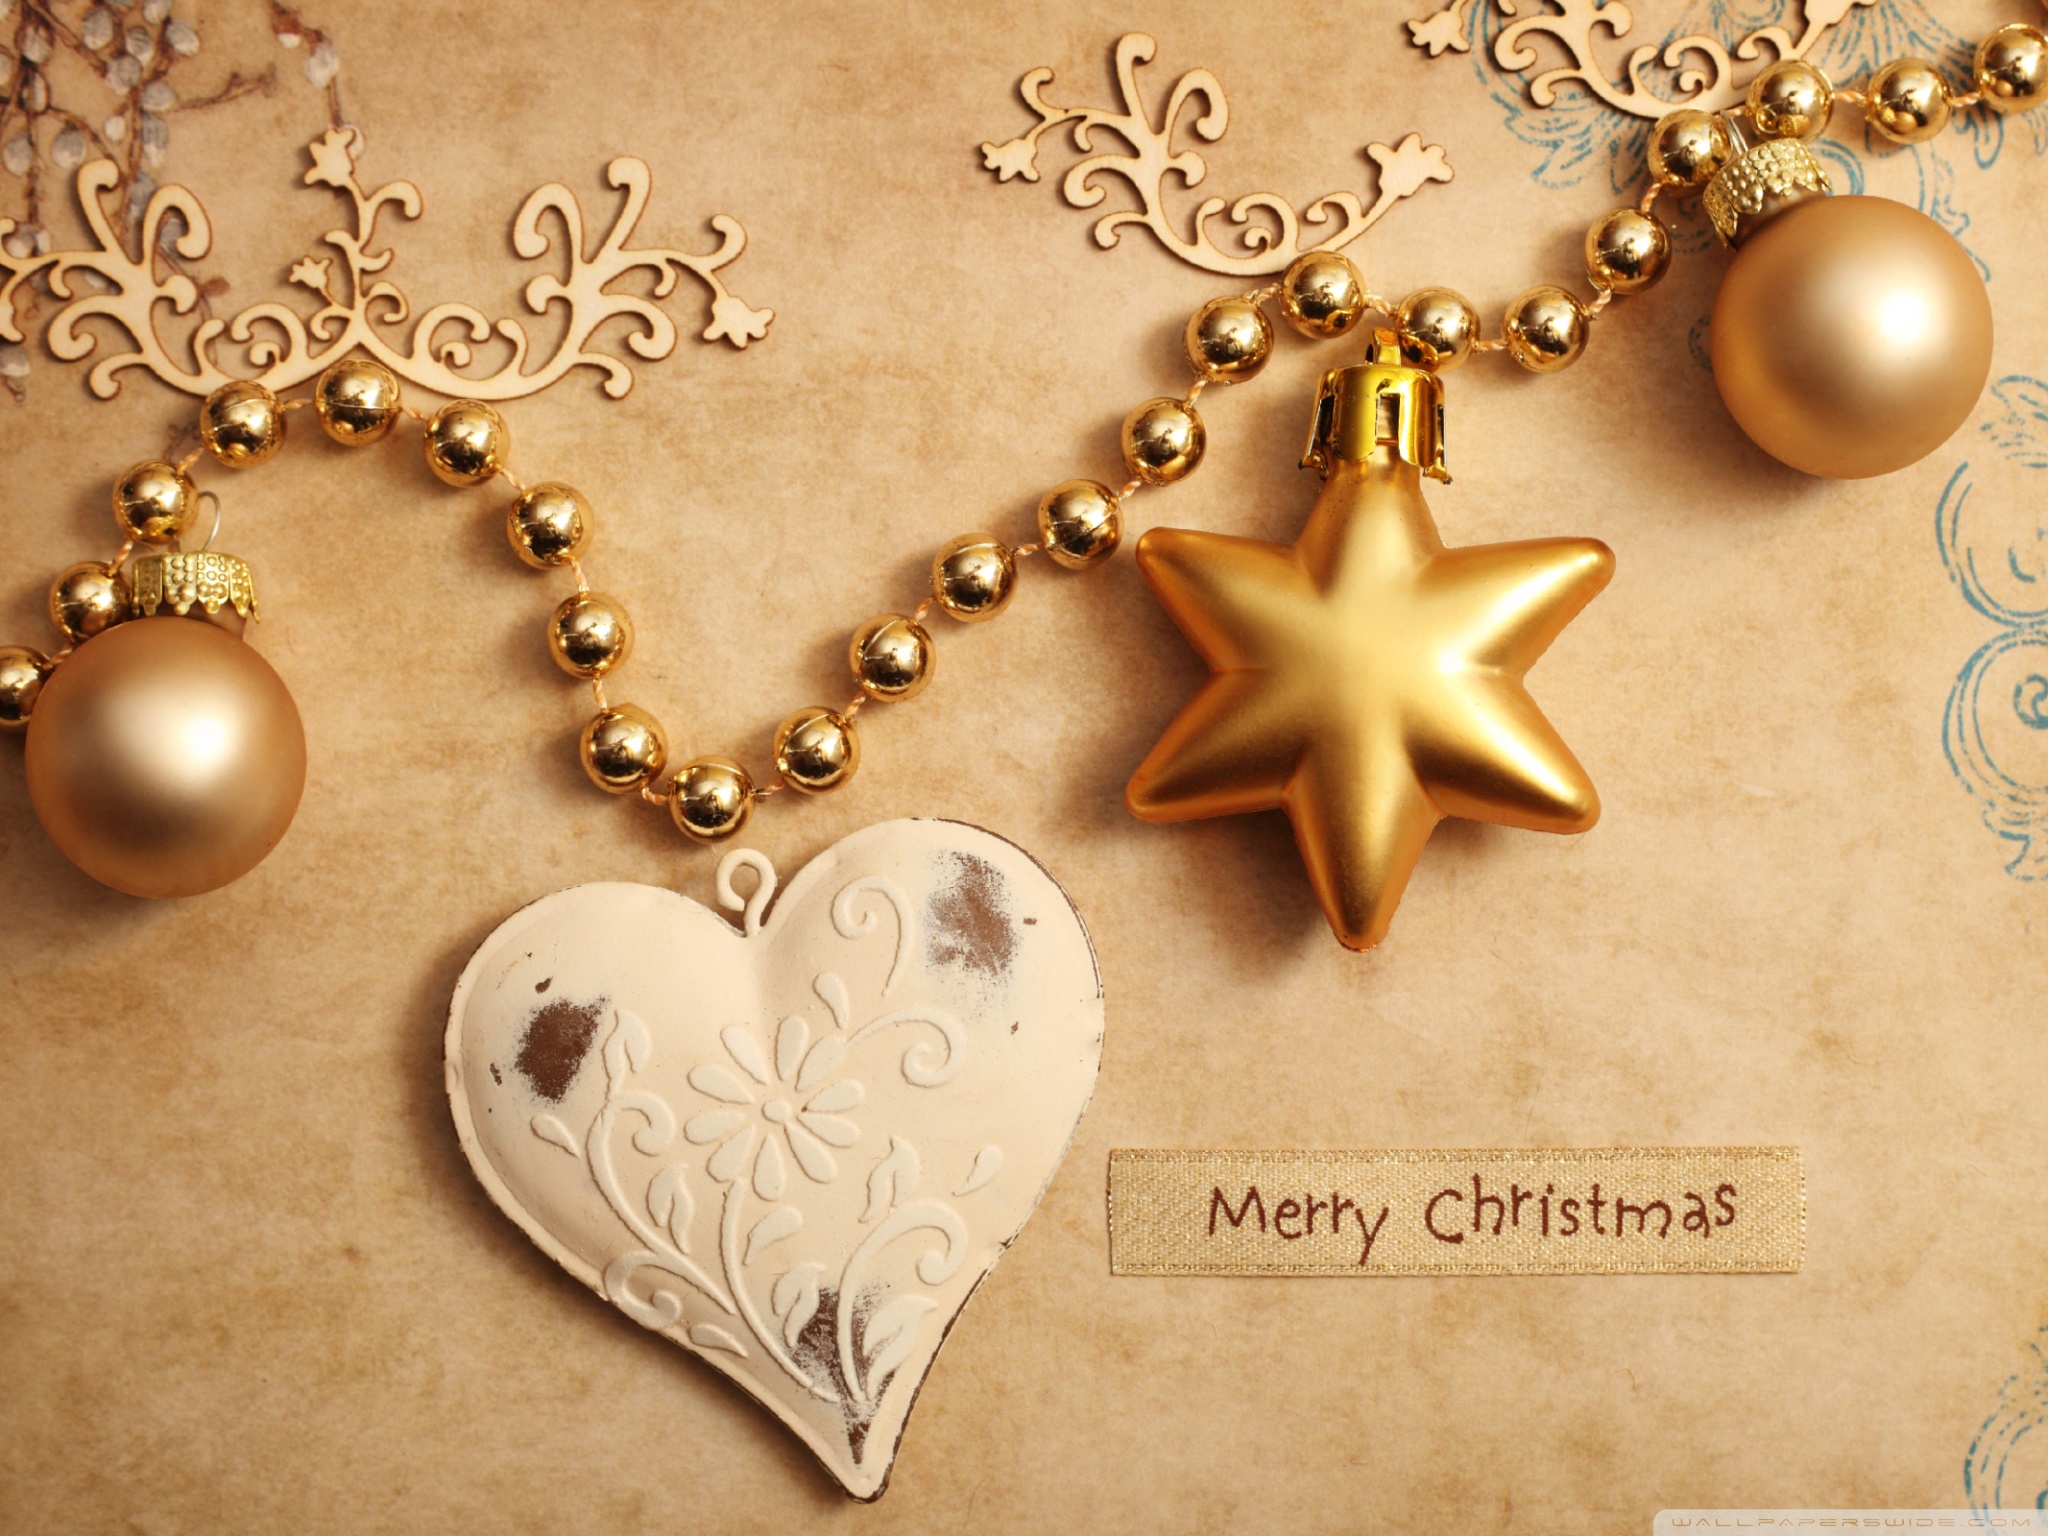 Merry Christmas Card Hd - HD Wallpaper 